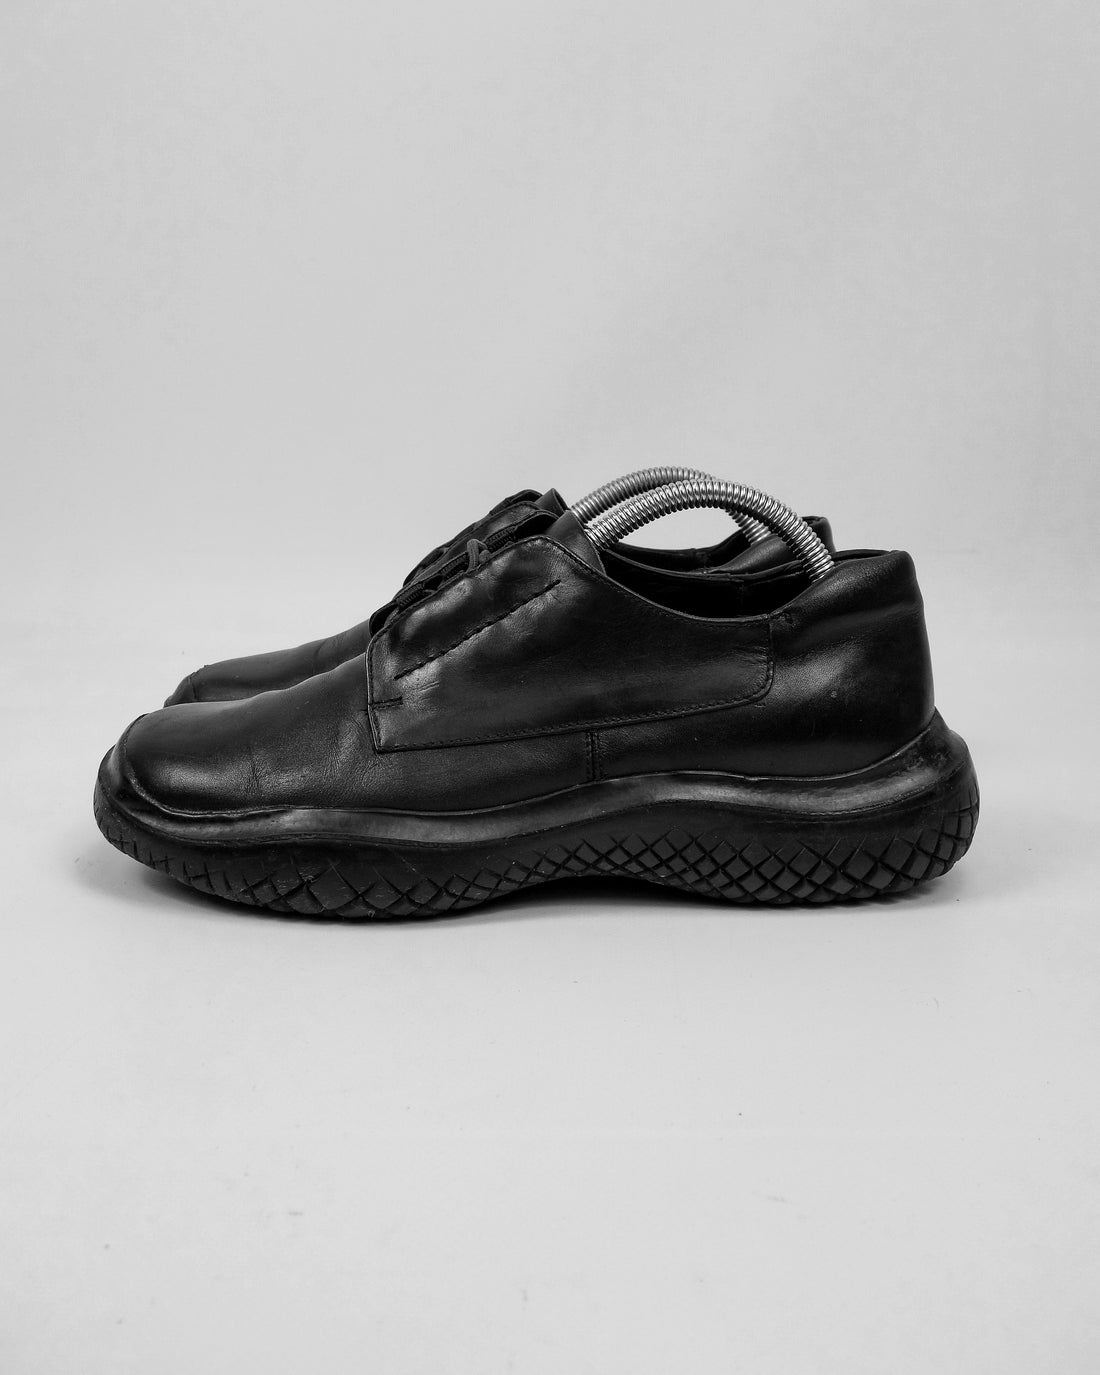 Prada x Vibram Black Leather Shoes 2000's